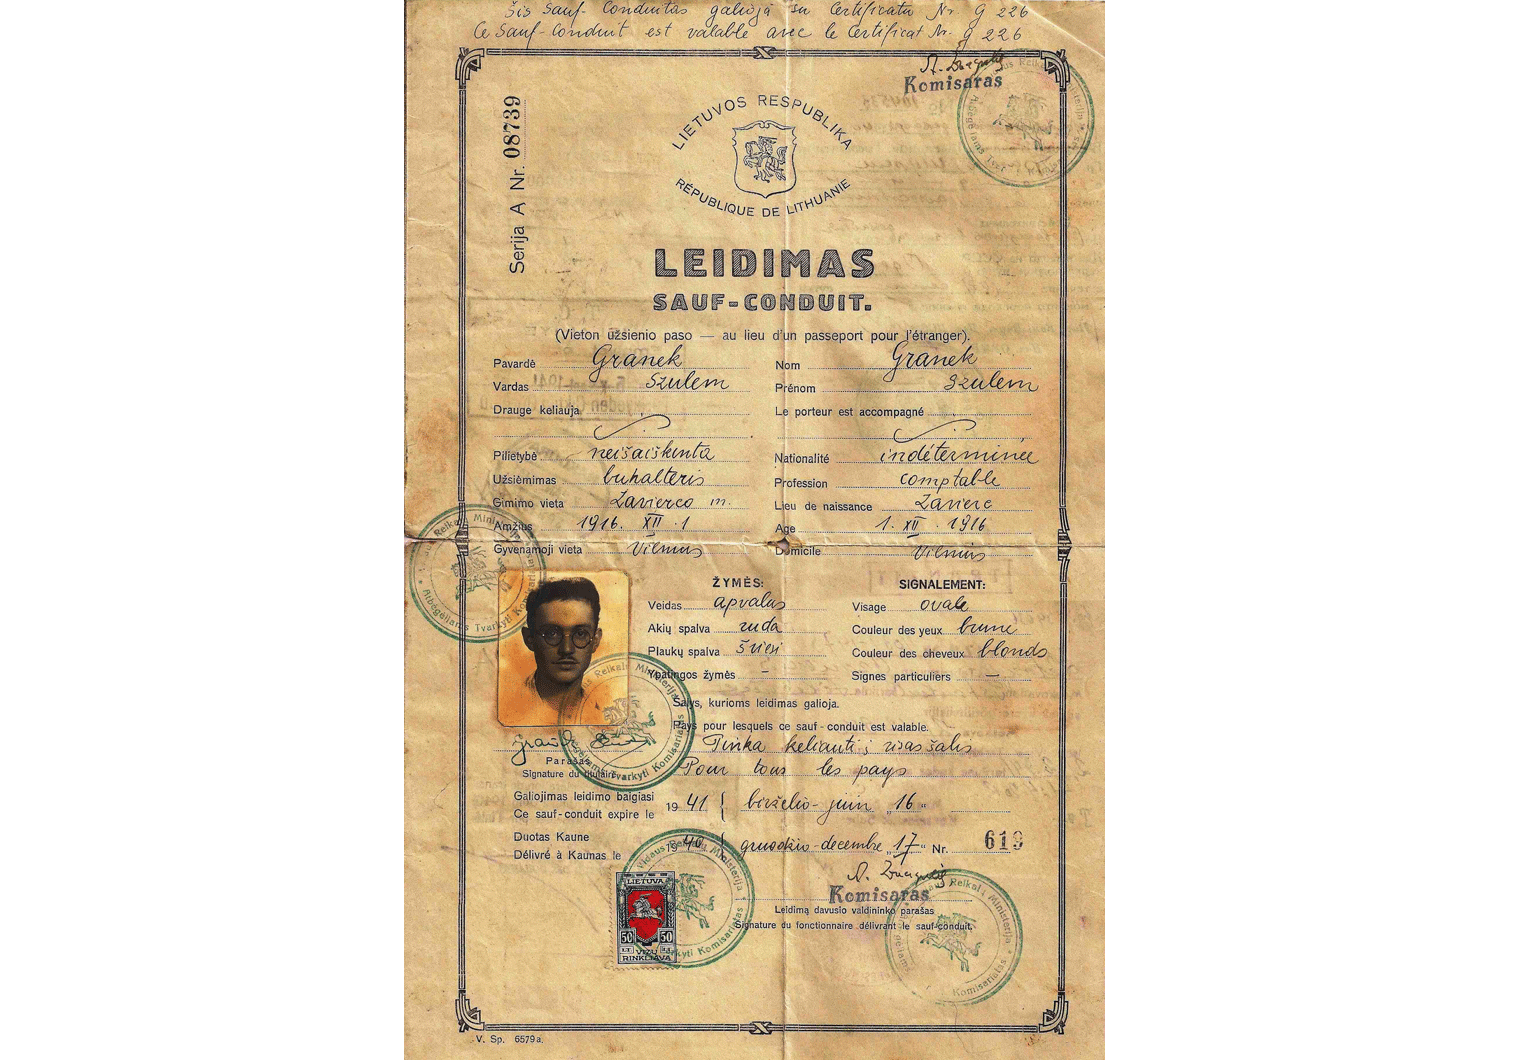 WW2 refugee travel document